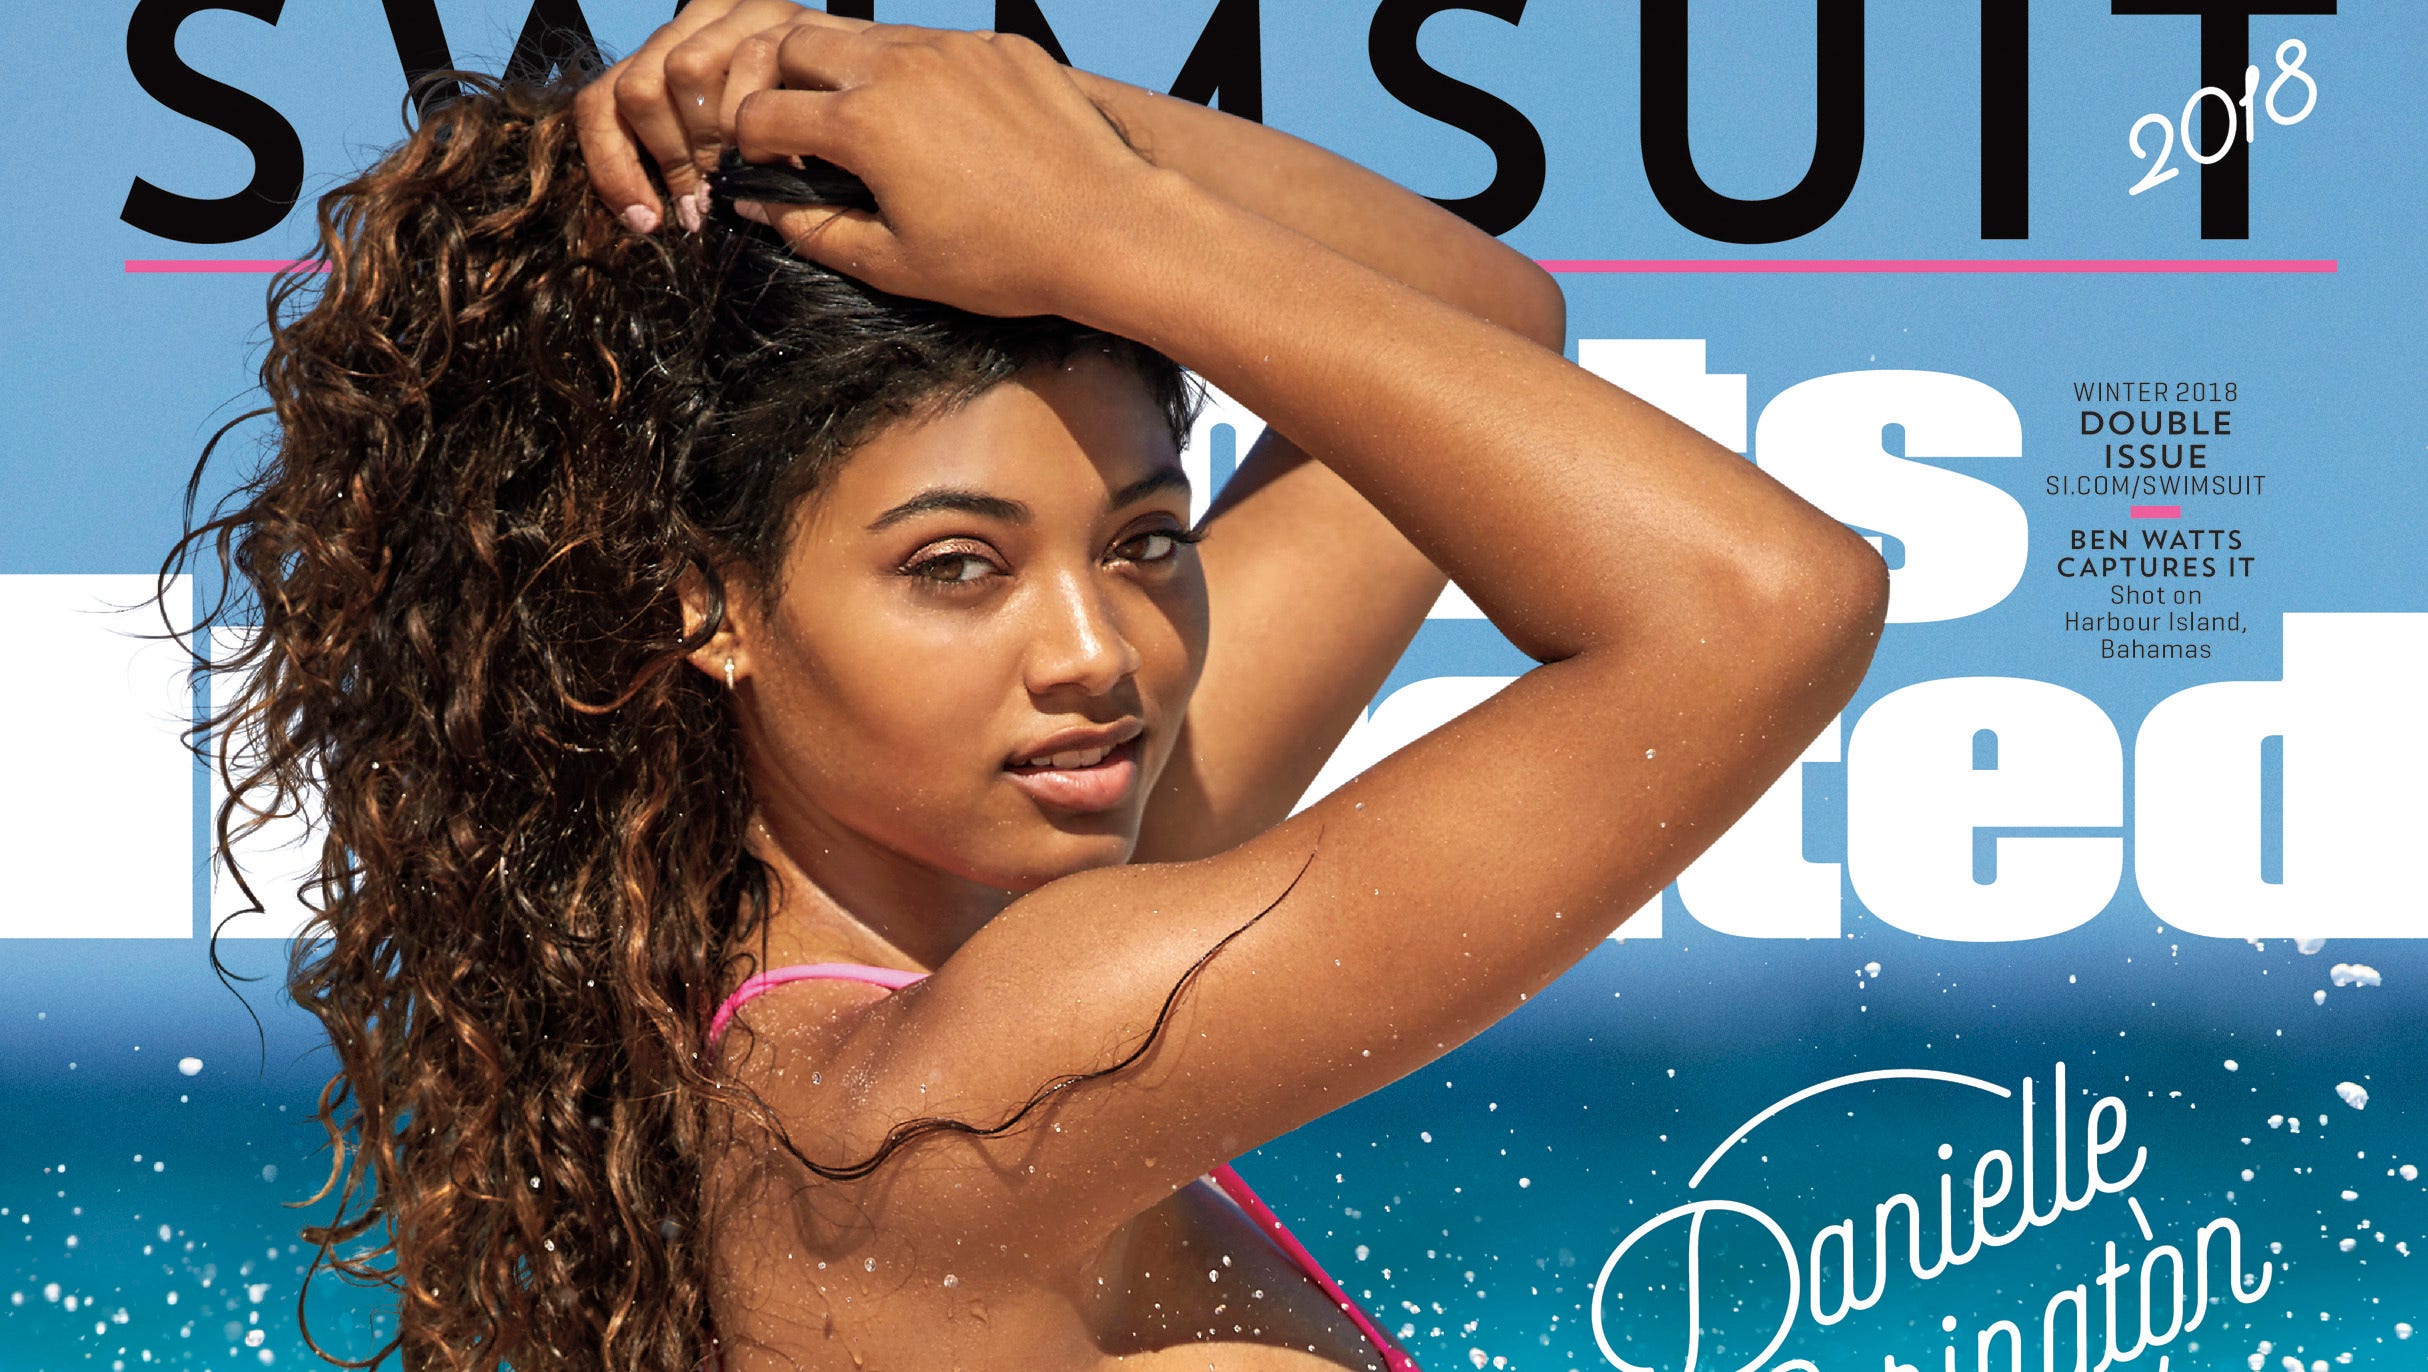 luisteraar Invloed geweer Who is Danielle Herrington? Get to know the Swimsuit Issue cover girl